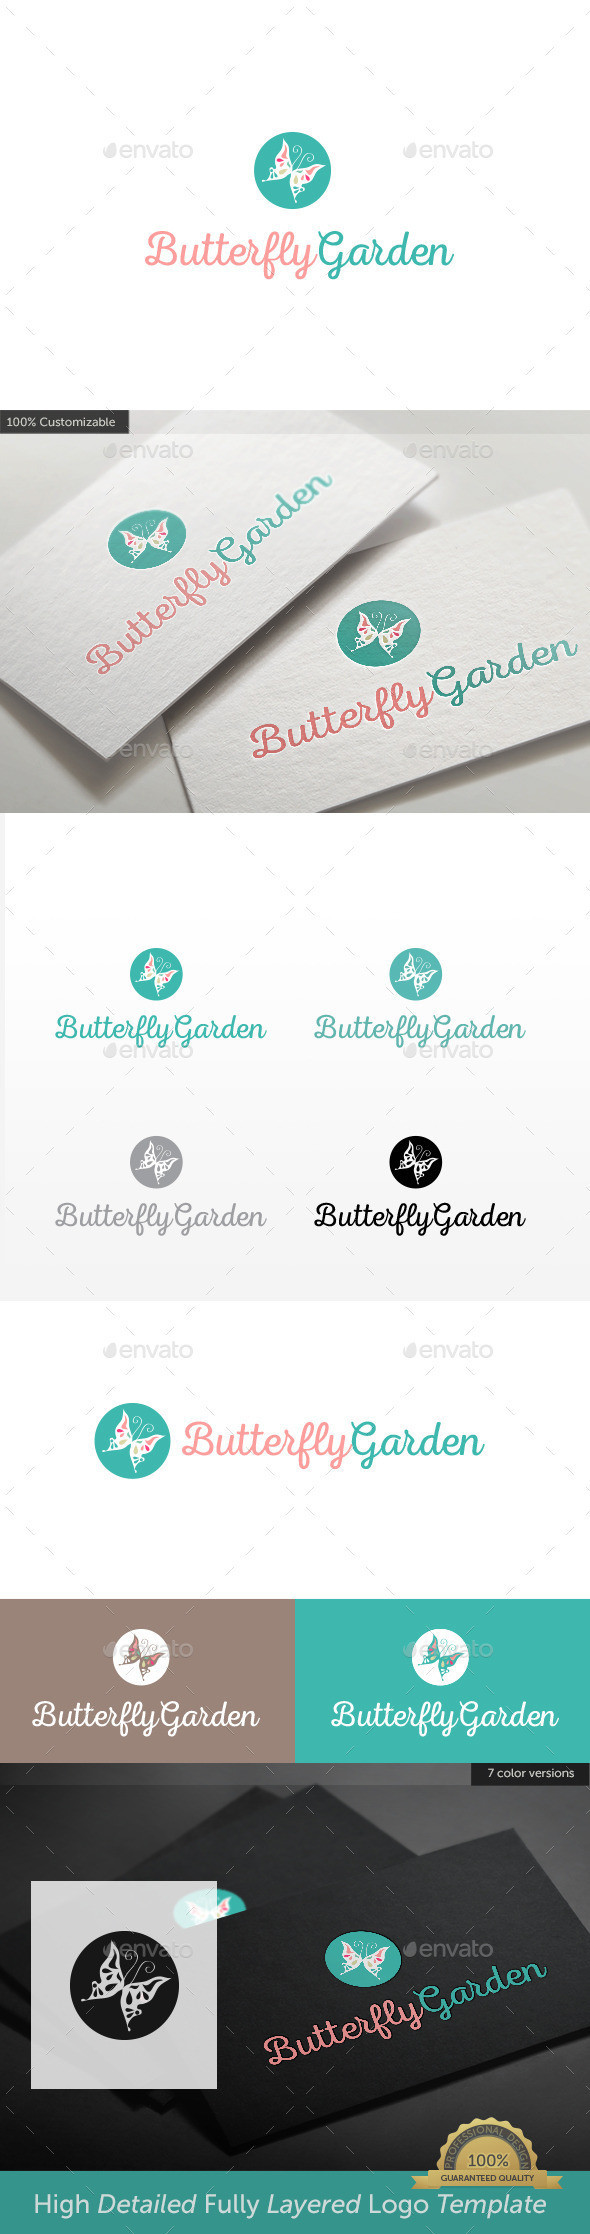 Butterfly garden  image